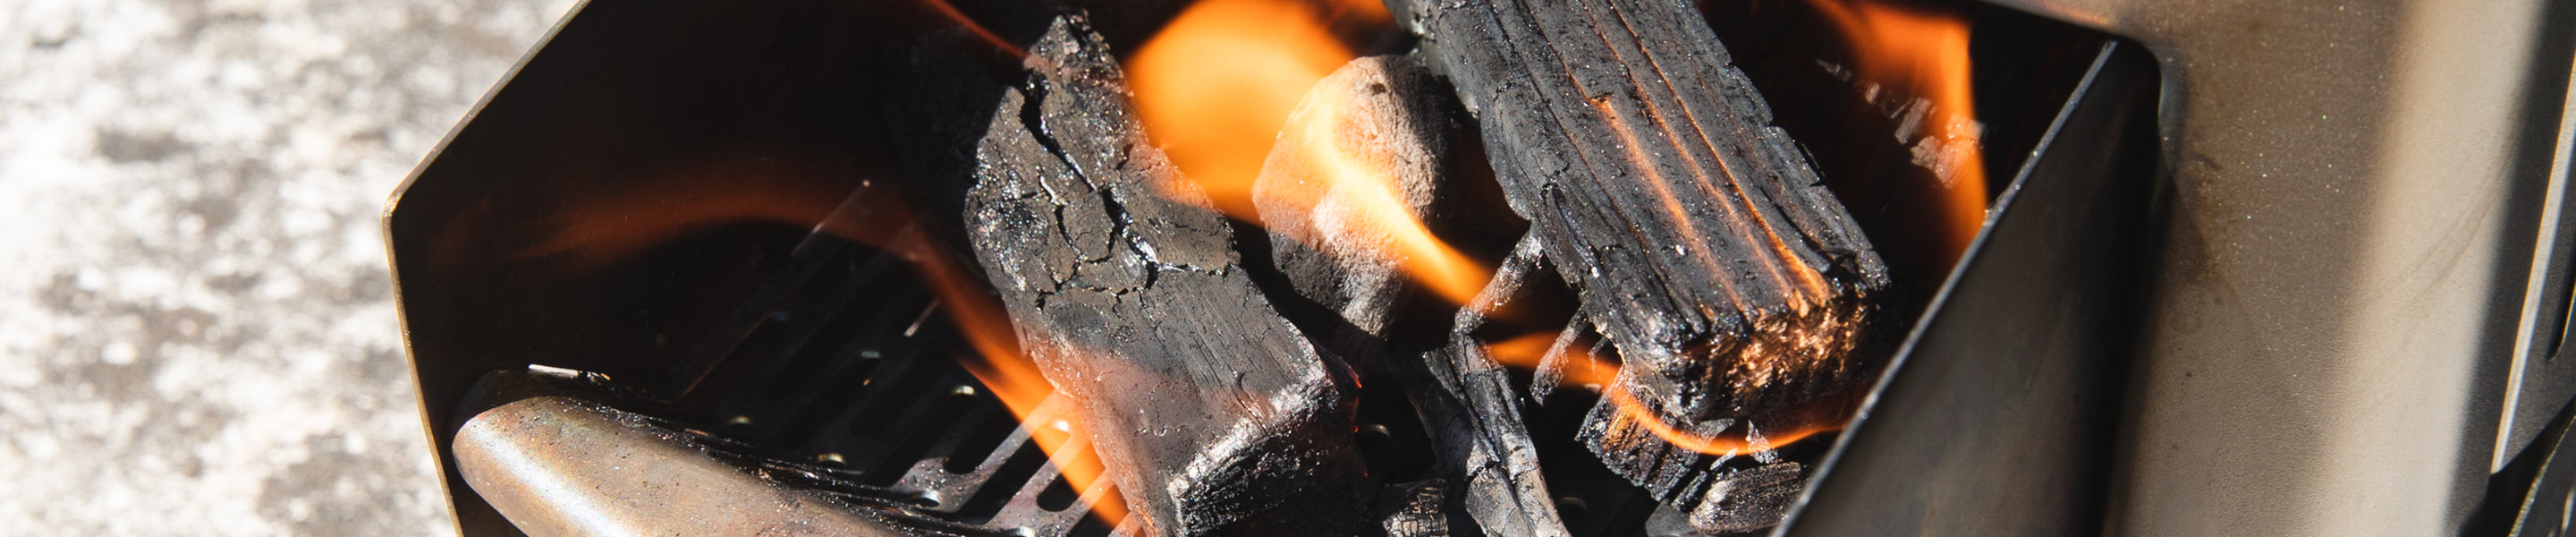 How to use Roccbox Wood Burner 2.0 – Gozney